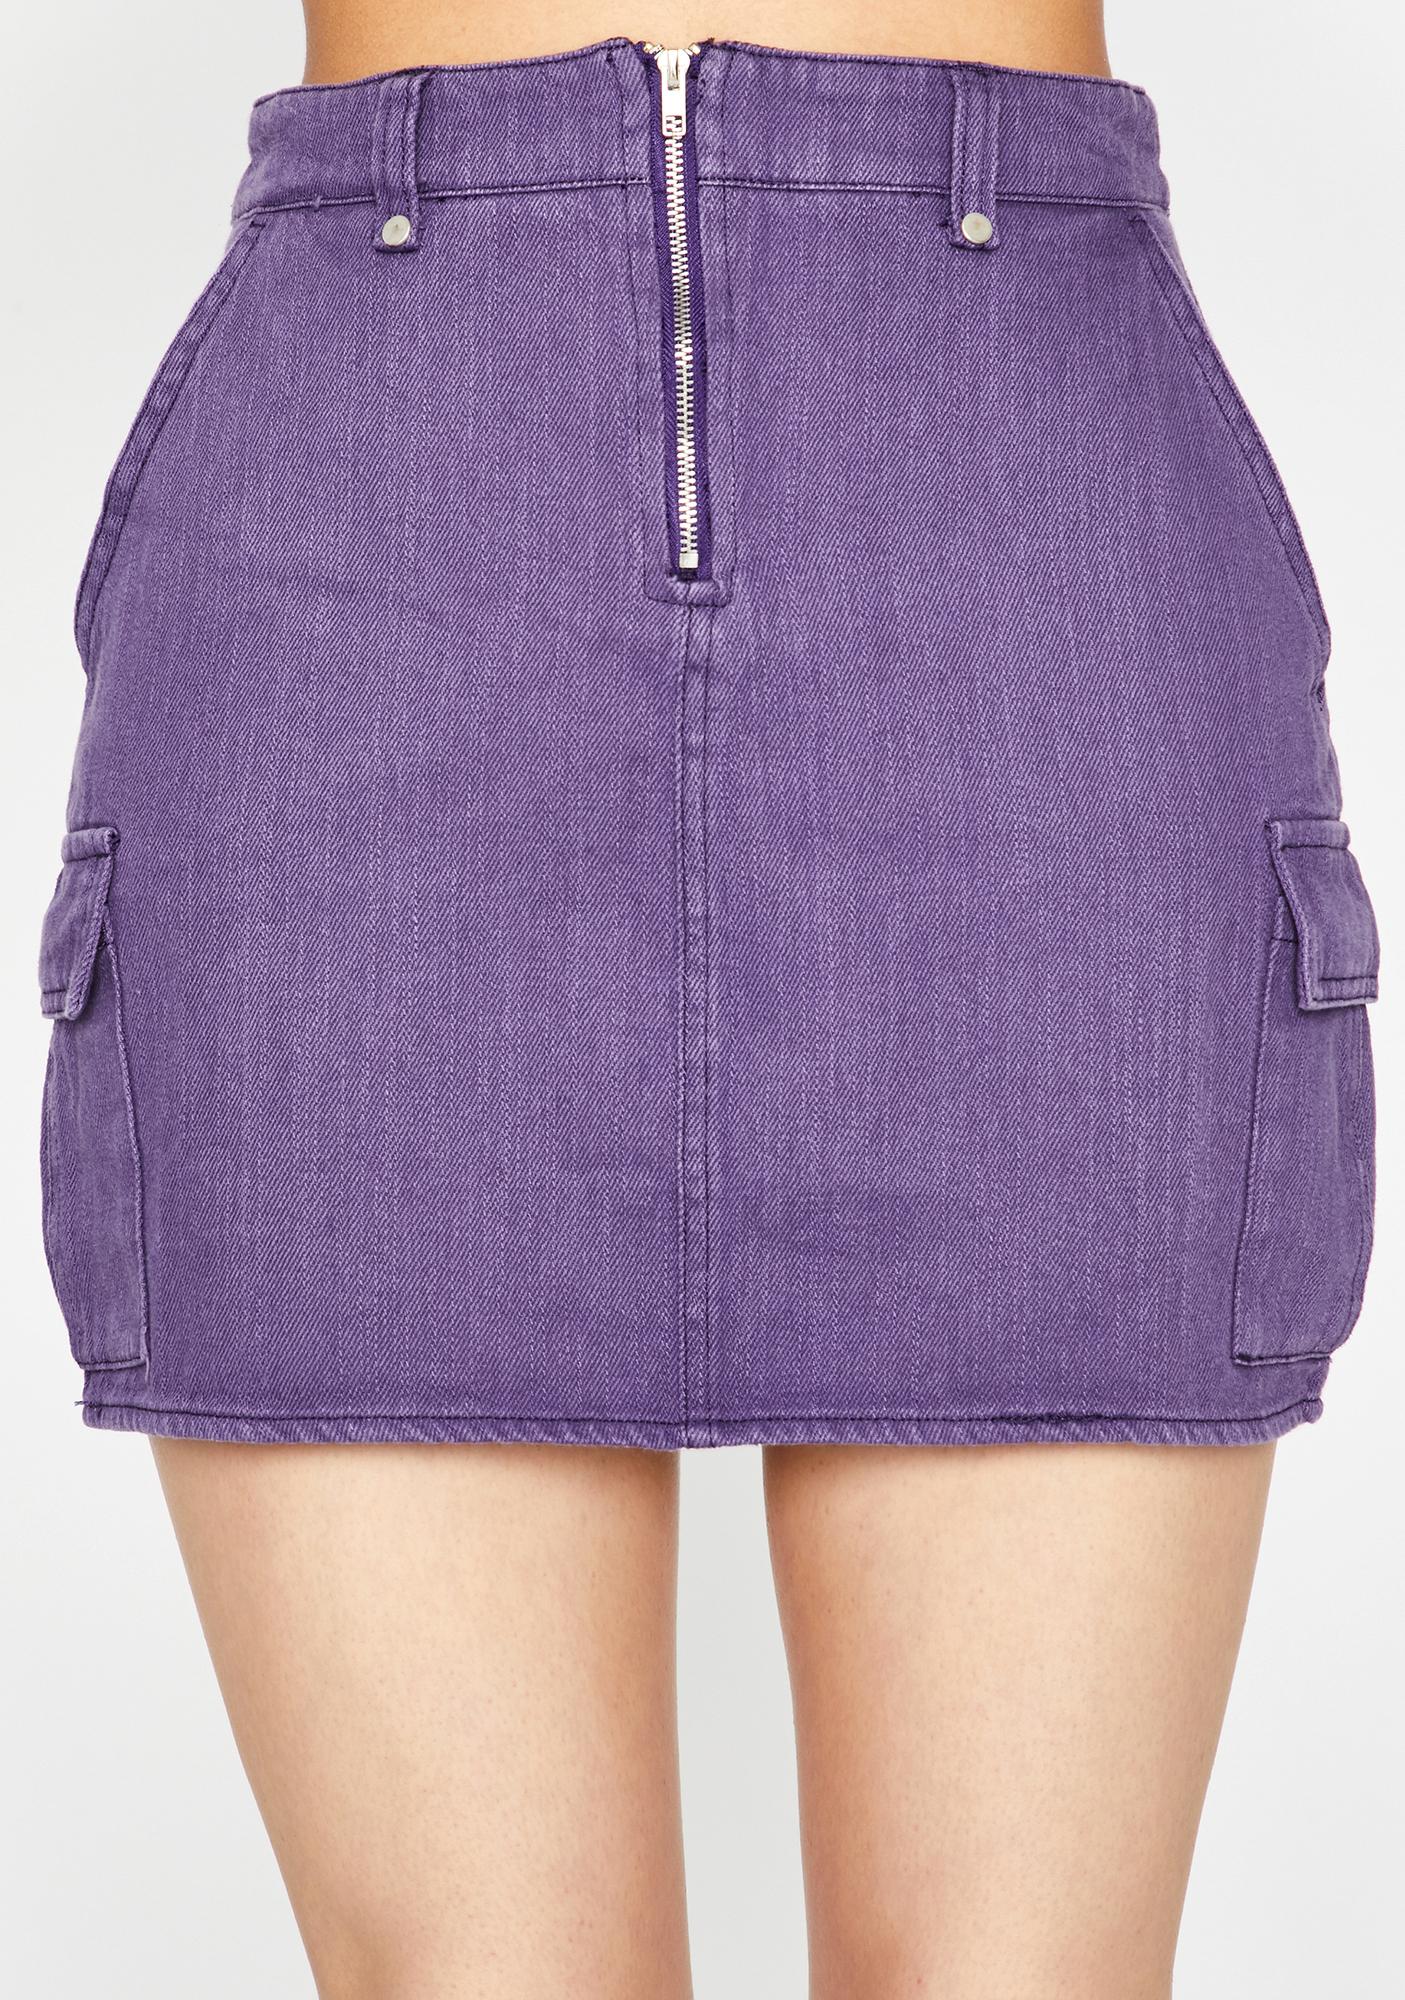 purple skirt denim